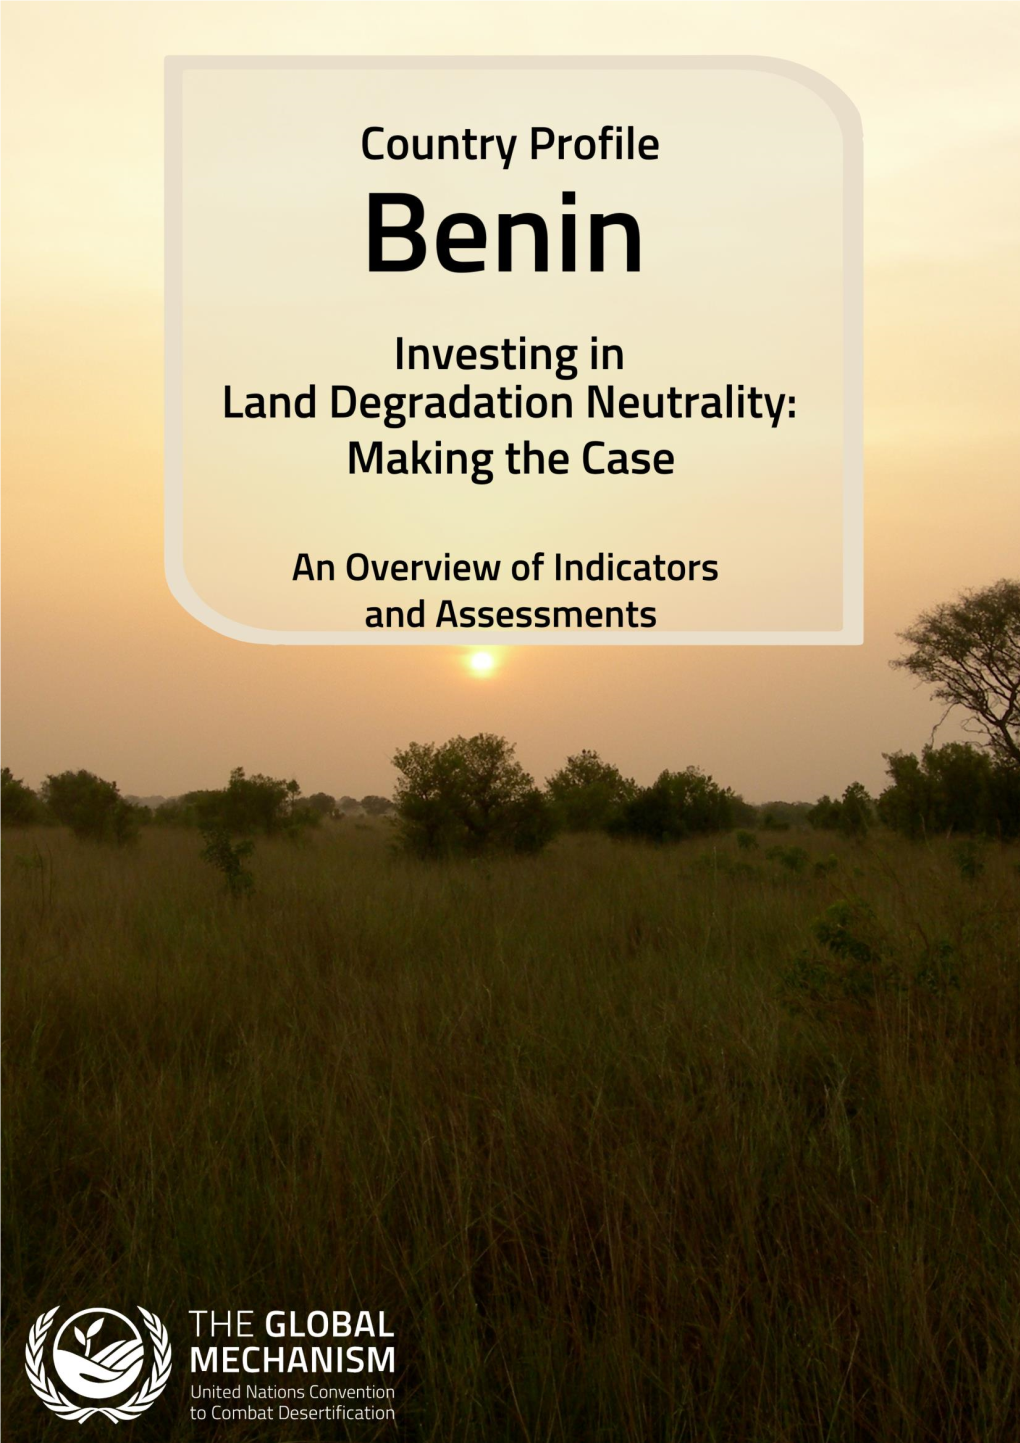 Benin Investing in Land Degradation Neutrality: Making the Case